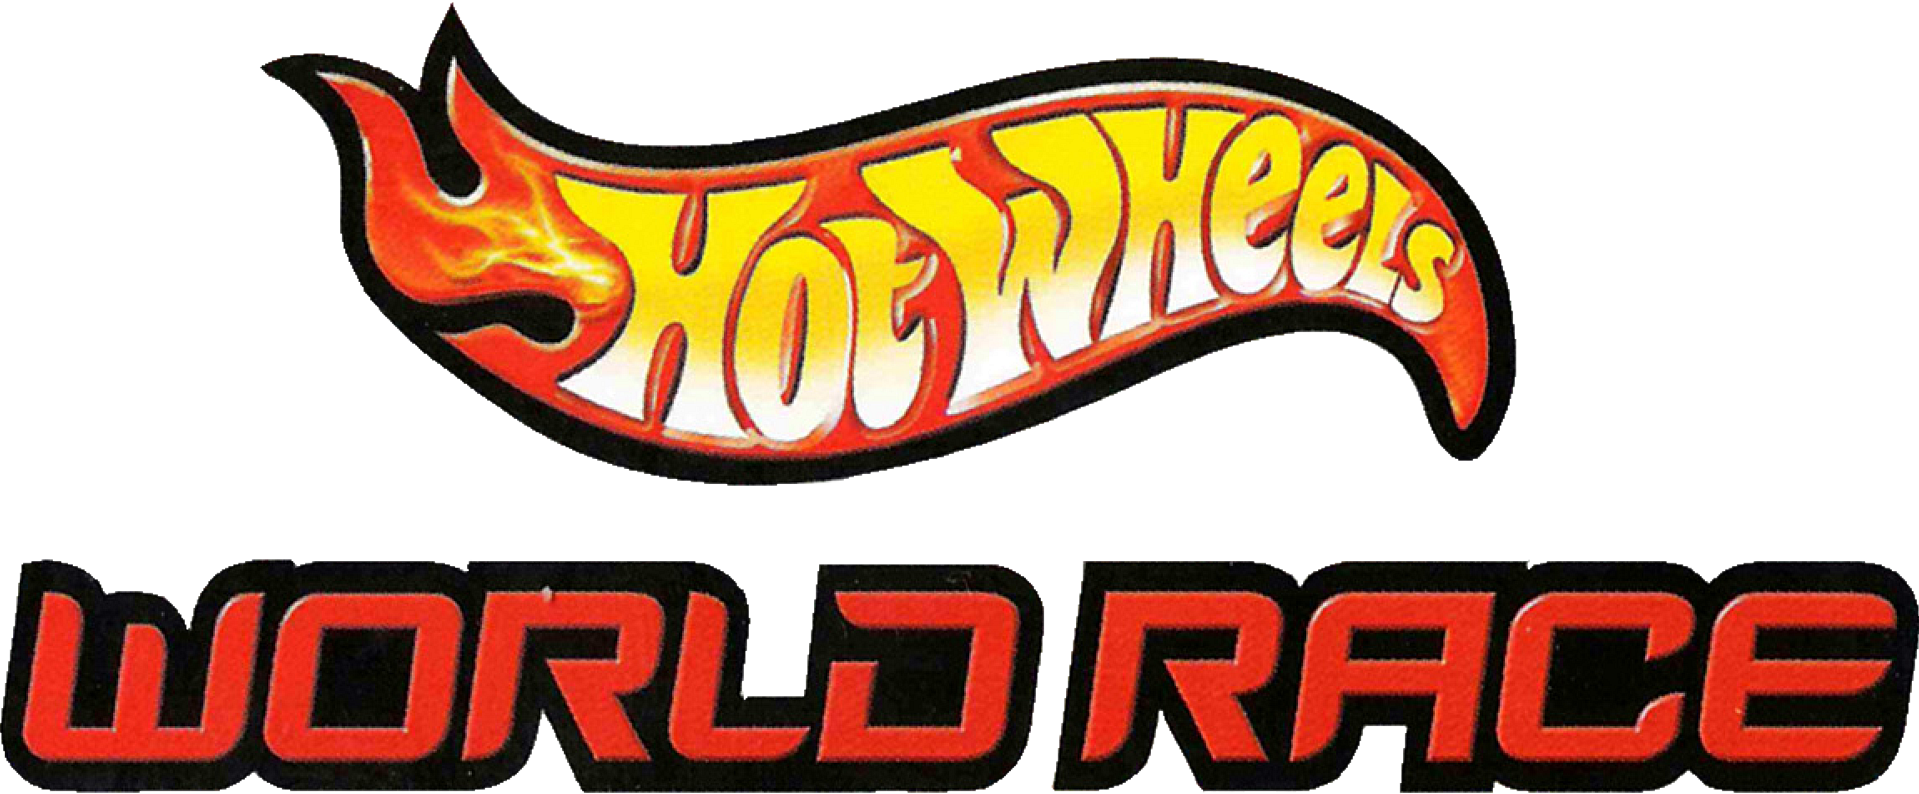 Hot Wheels - Hot Wheels Highway 35 World Race Logo (1919x794), Png Download